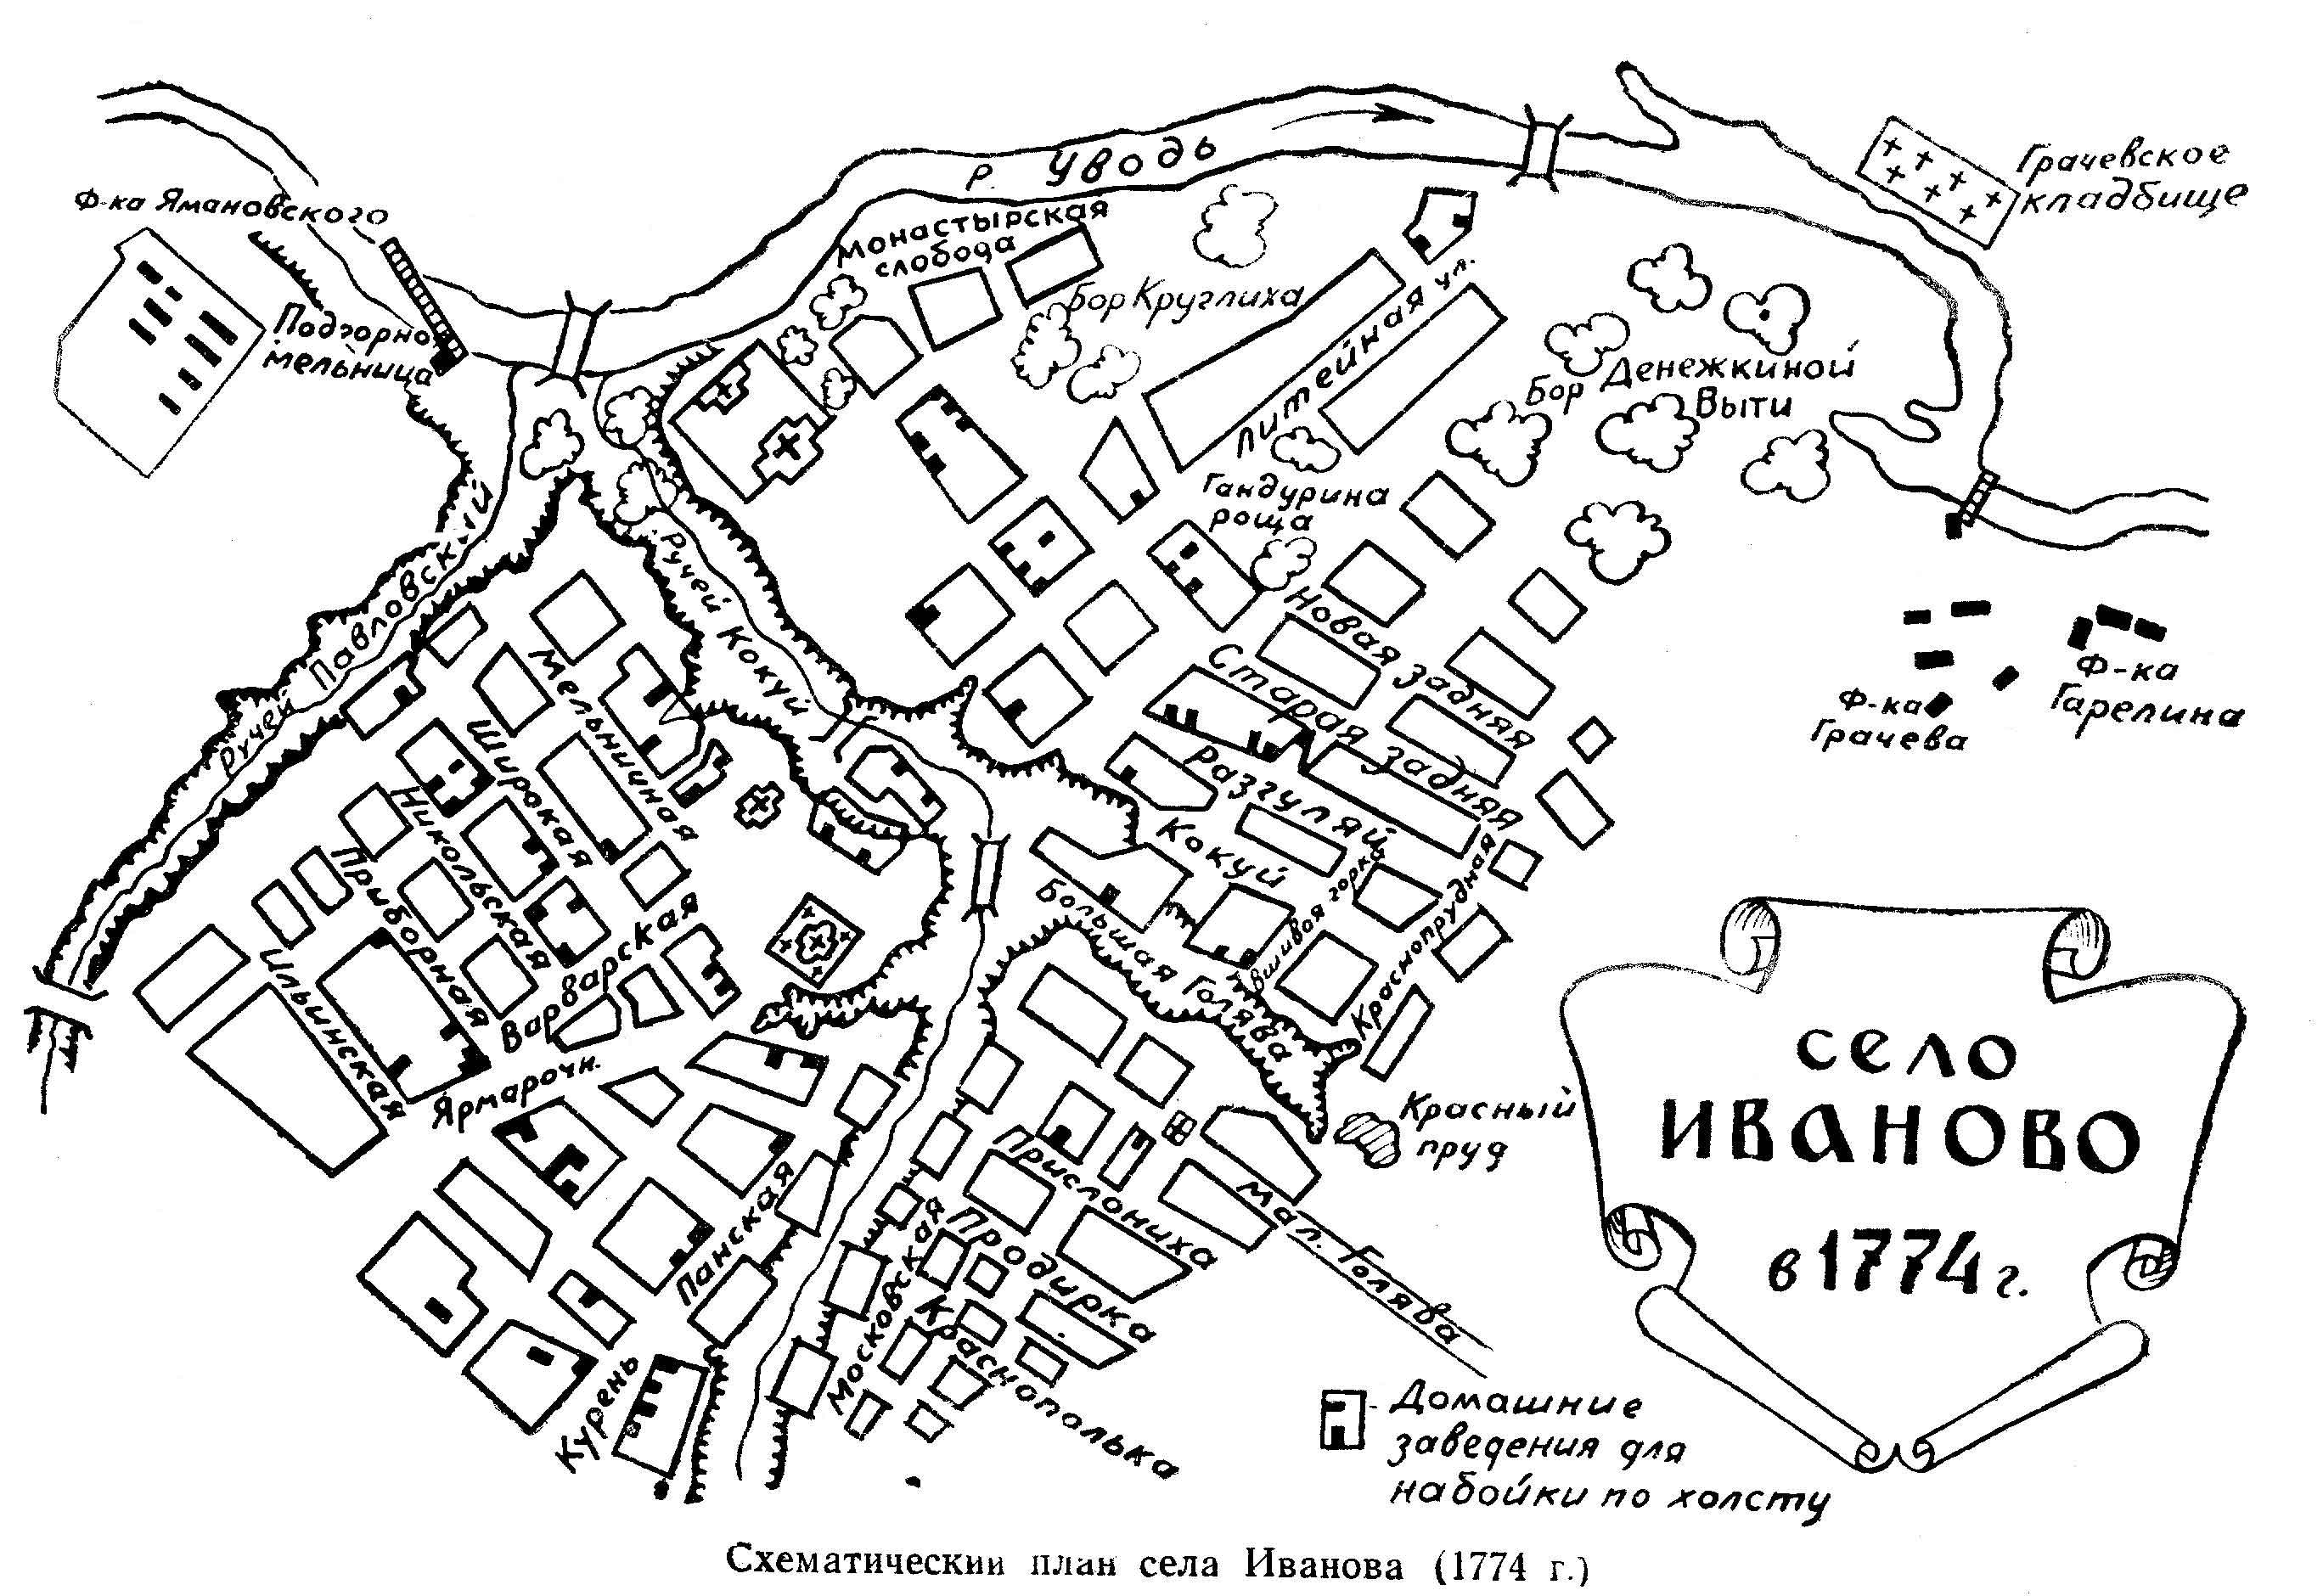 18th century plan of Ivanovo